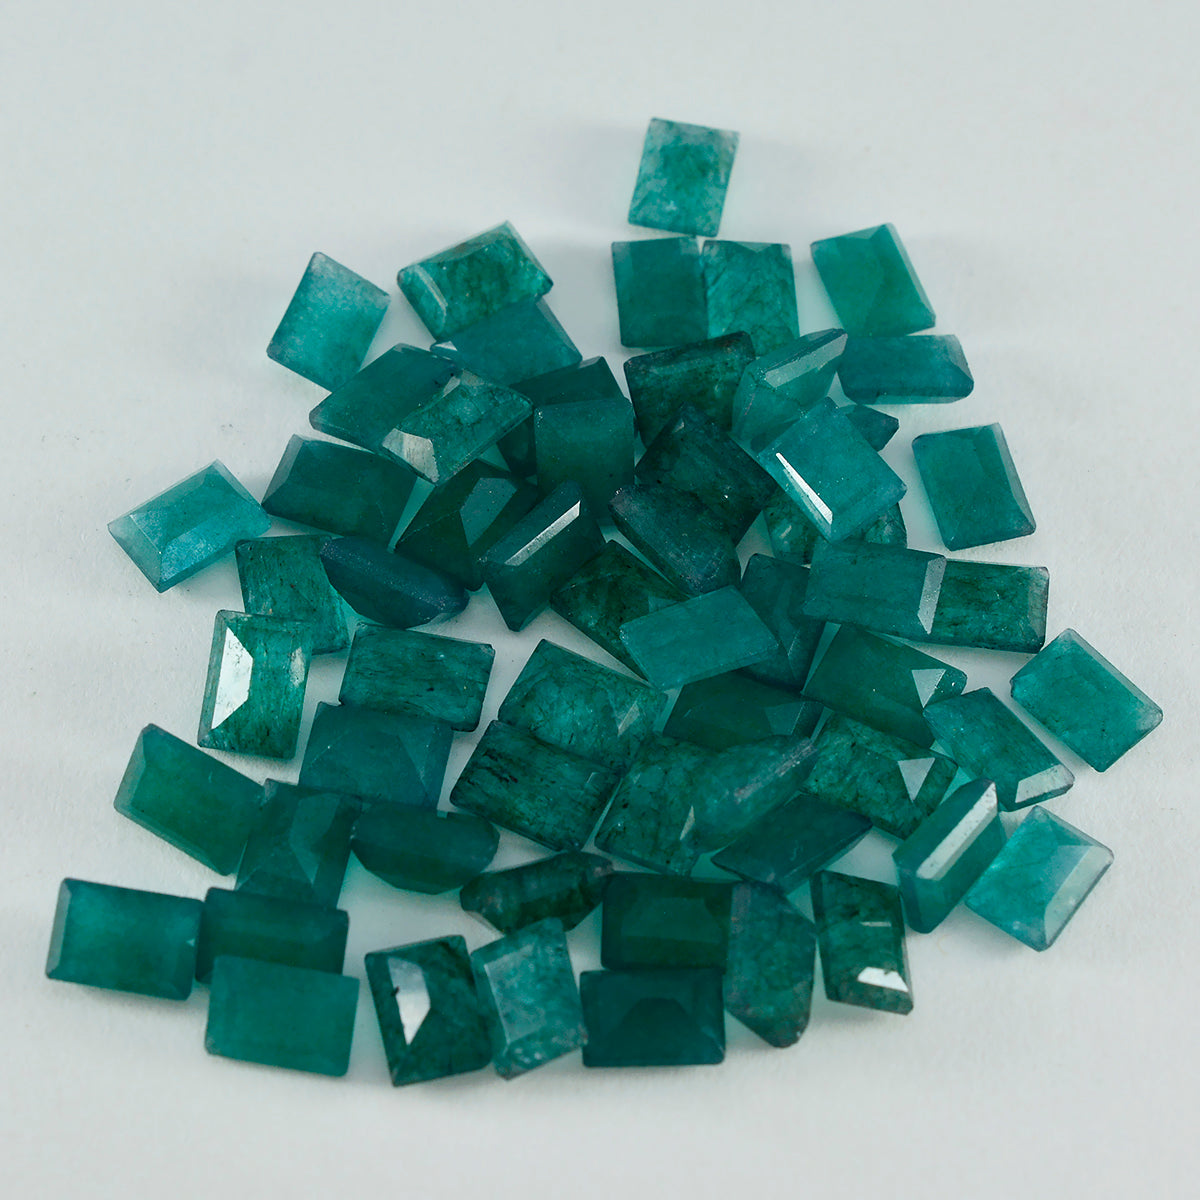 riyogems 1 pz autentico diaspro verde sfaccettato 5x7 mm forma ottagonale gemme di ottima qualità